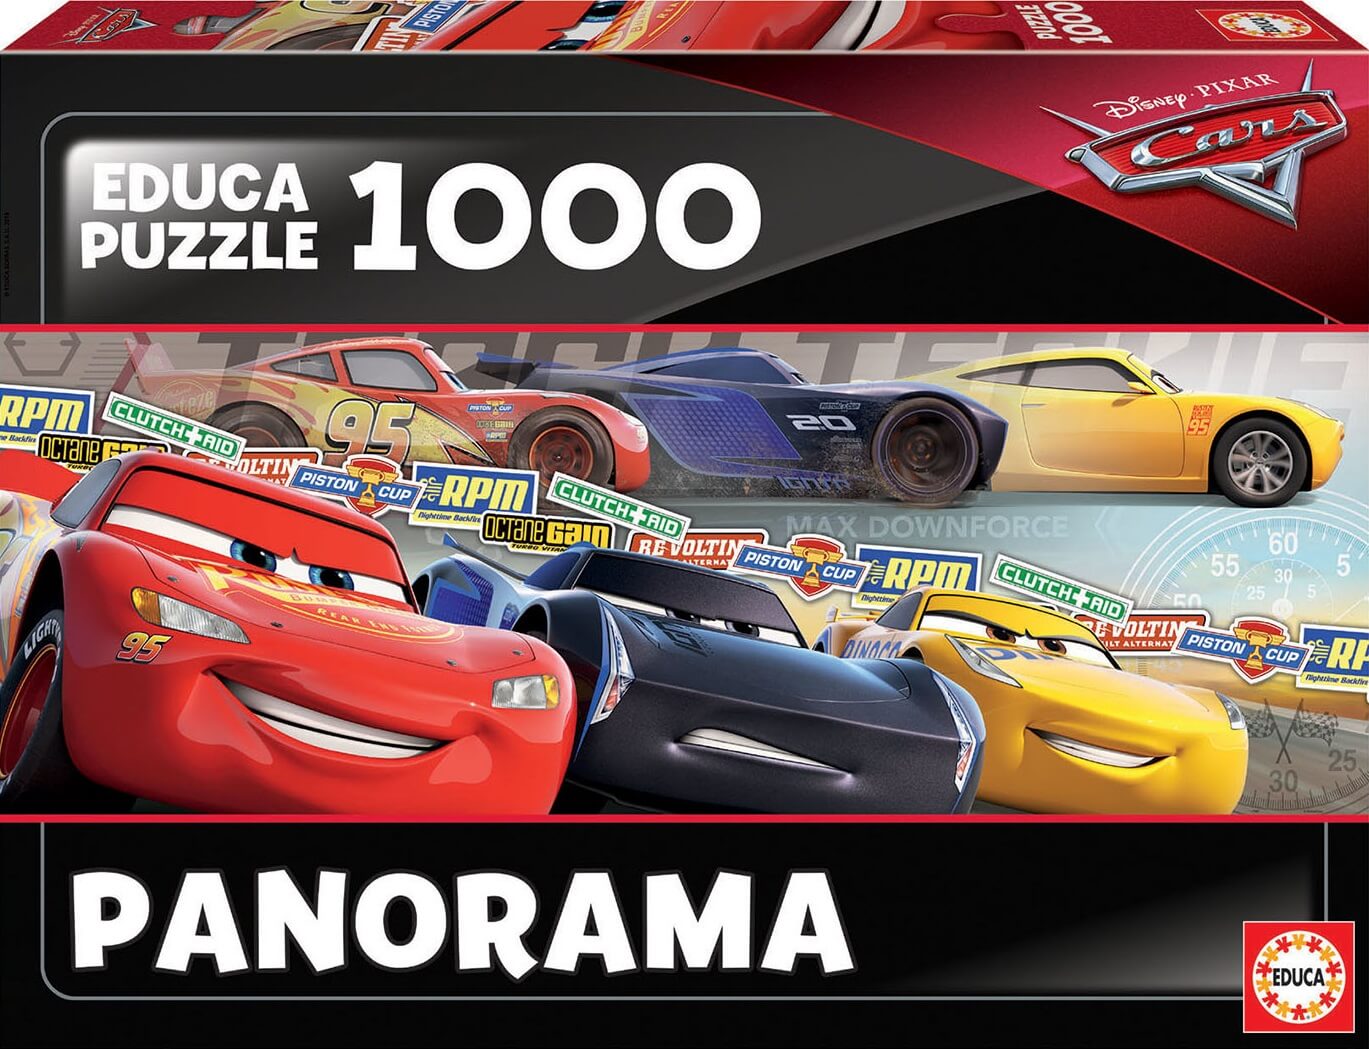 1000 Panorama Cars